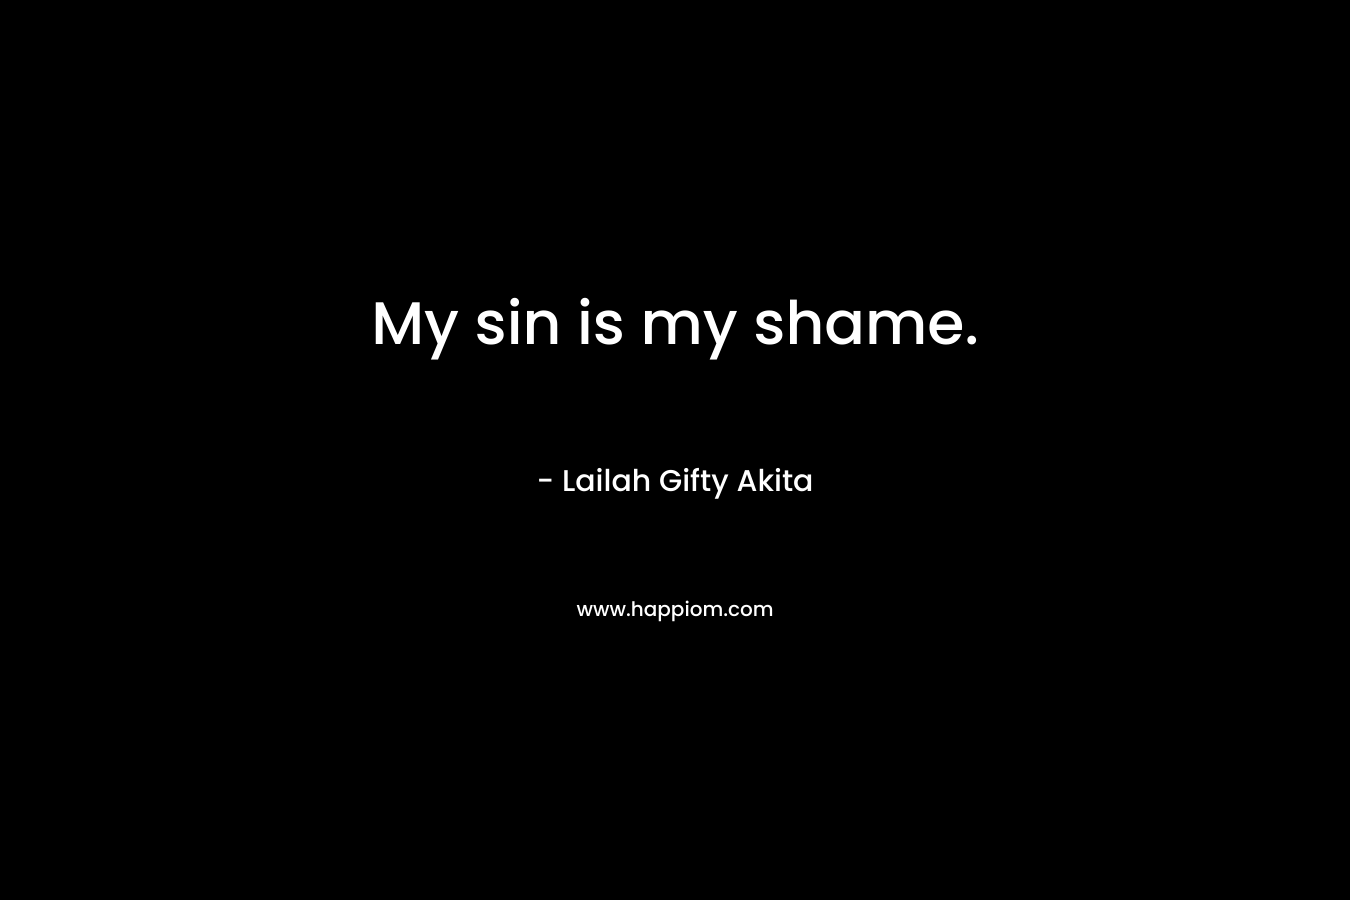 My sin is my shame.